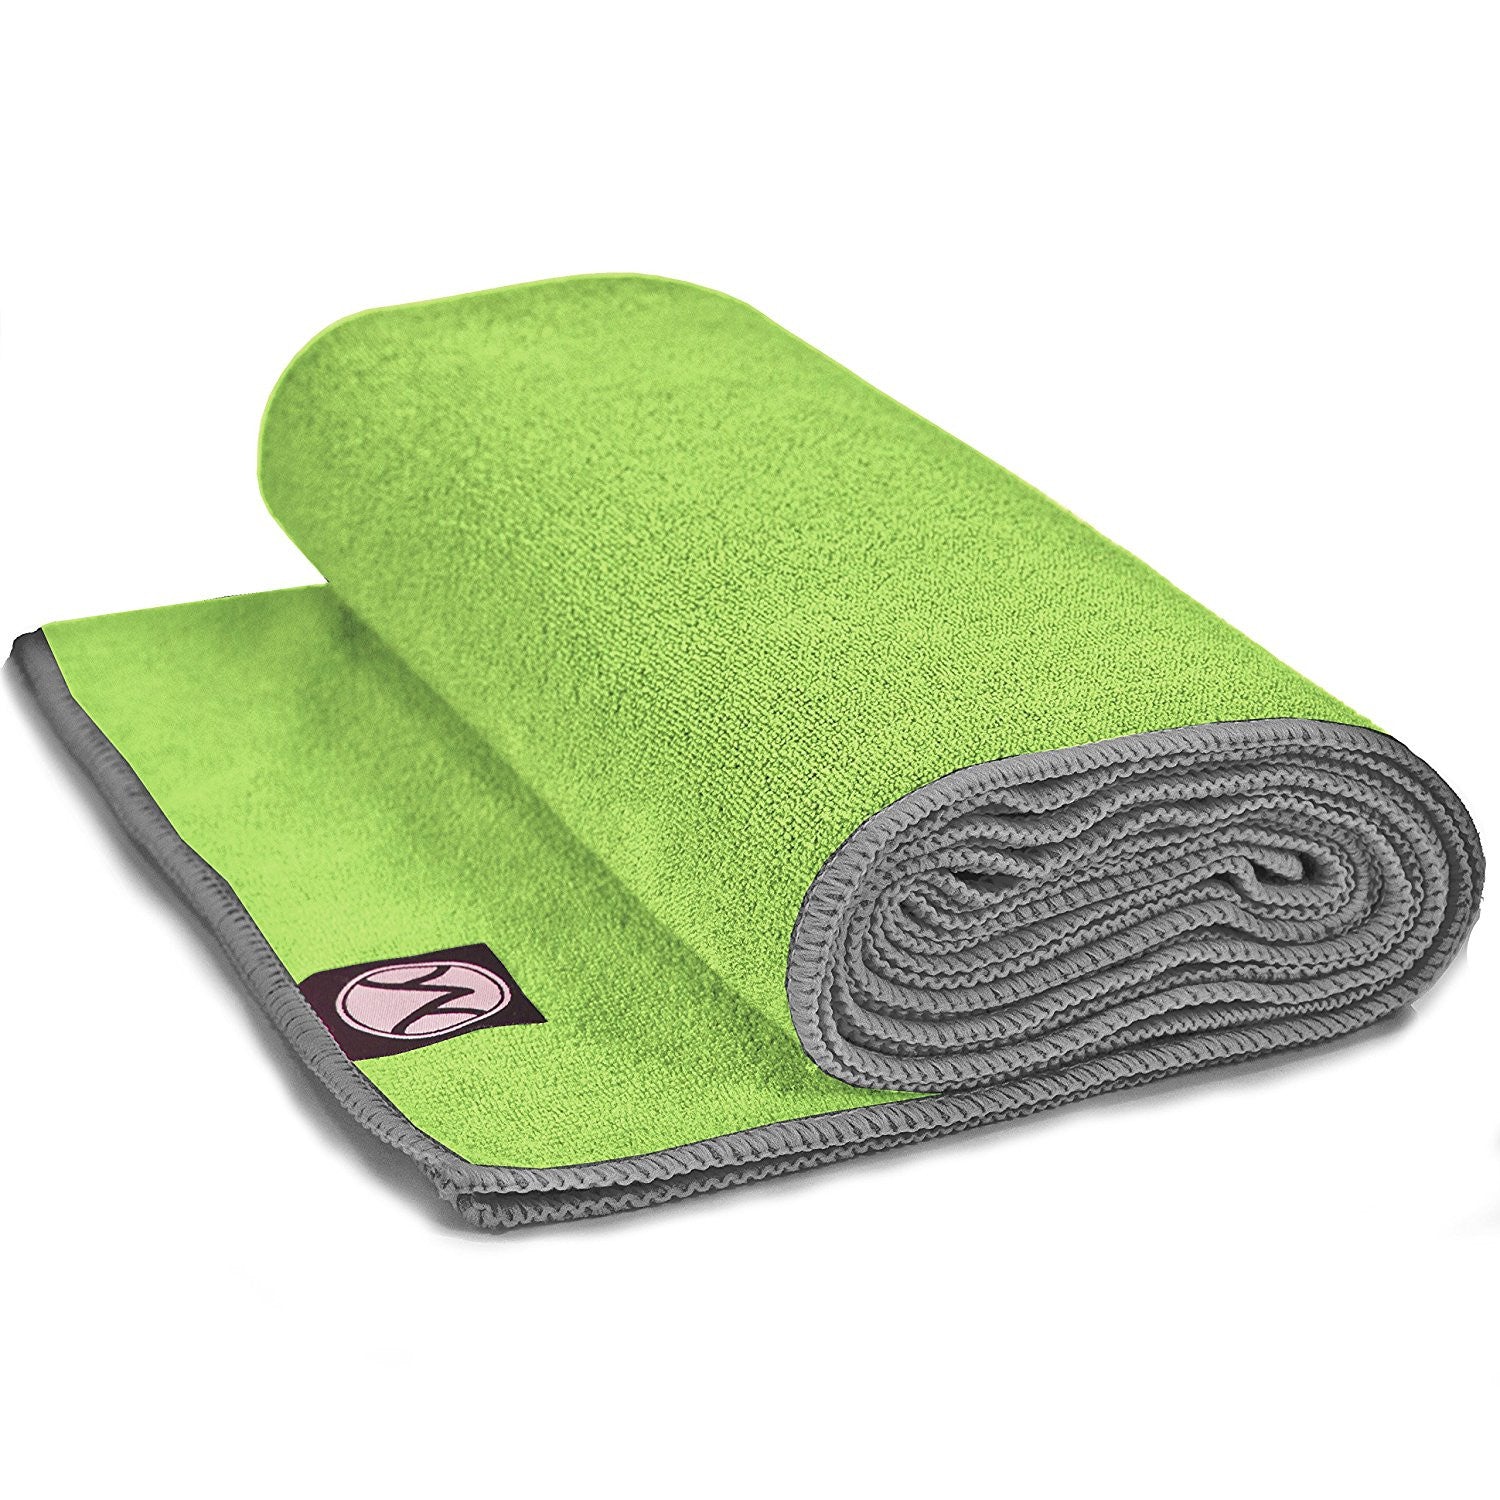 Yoga Rug  Anti-slip, Eco Friendly, And Better Than A Yoga Towel.